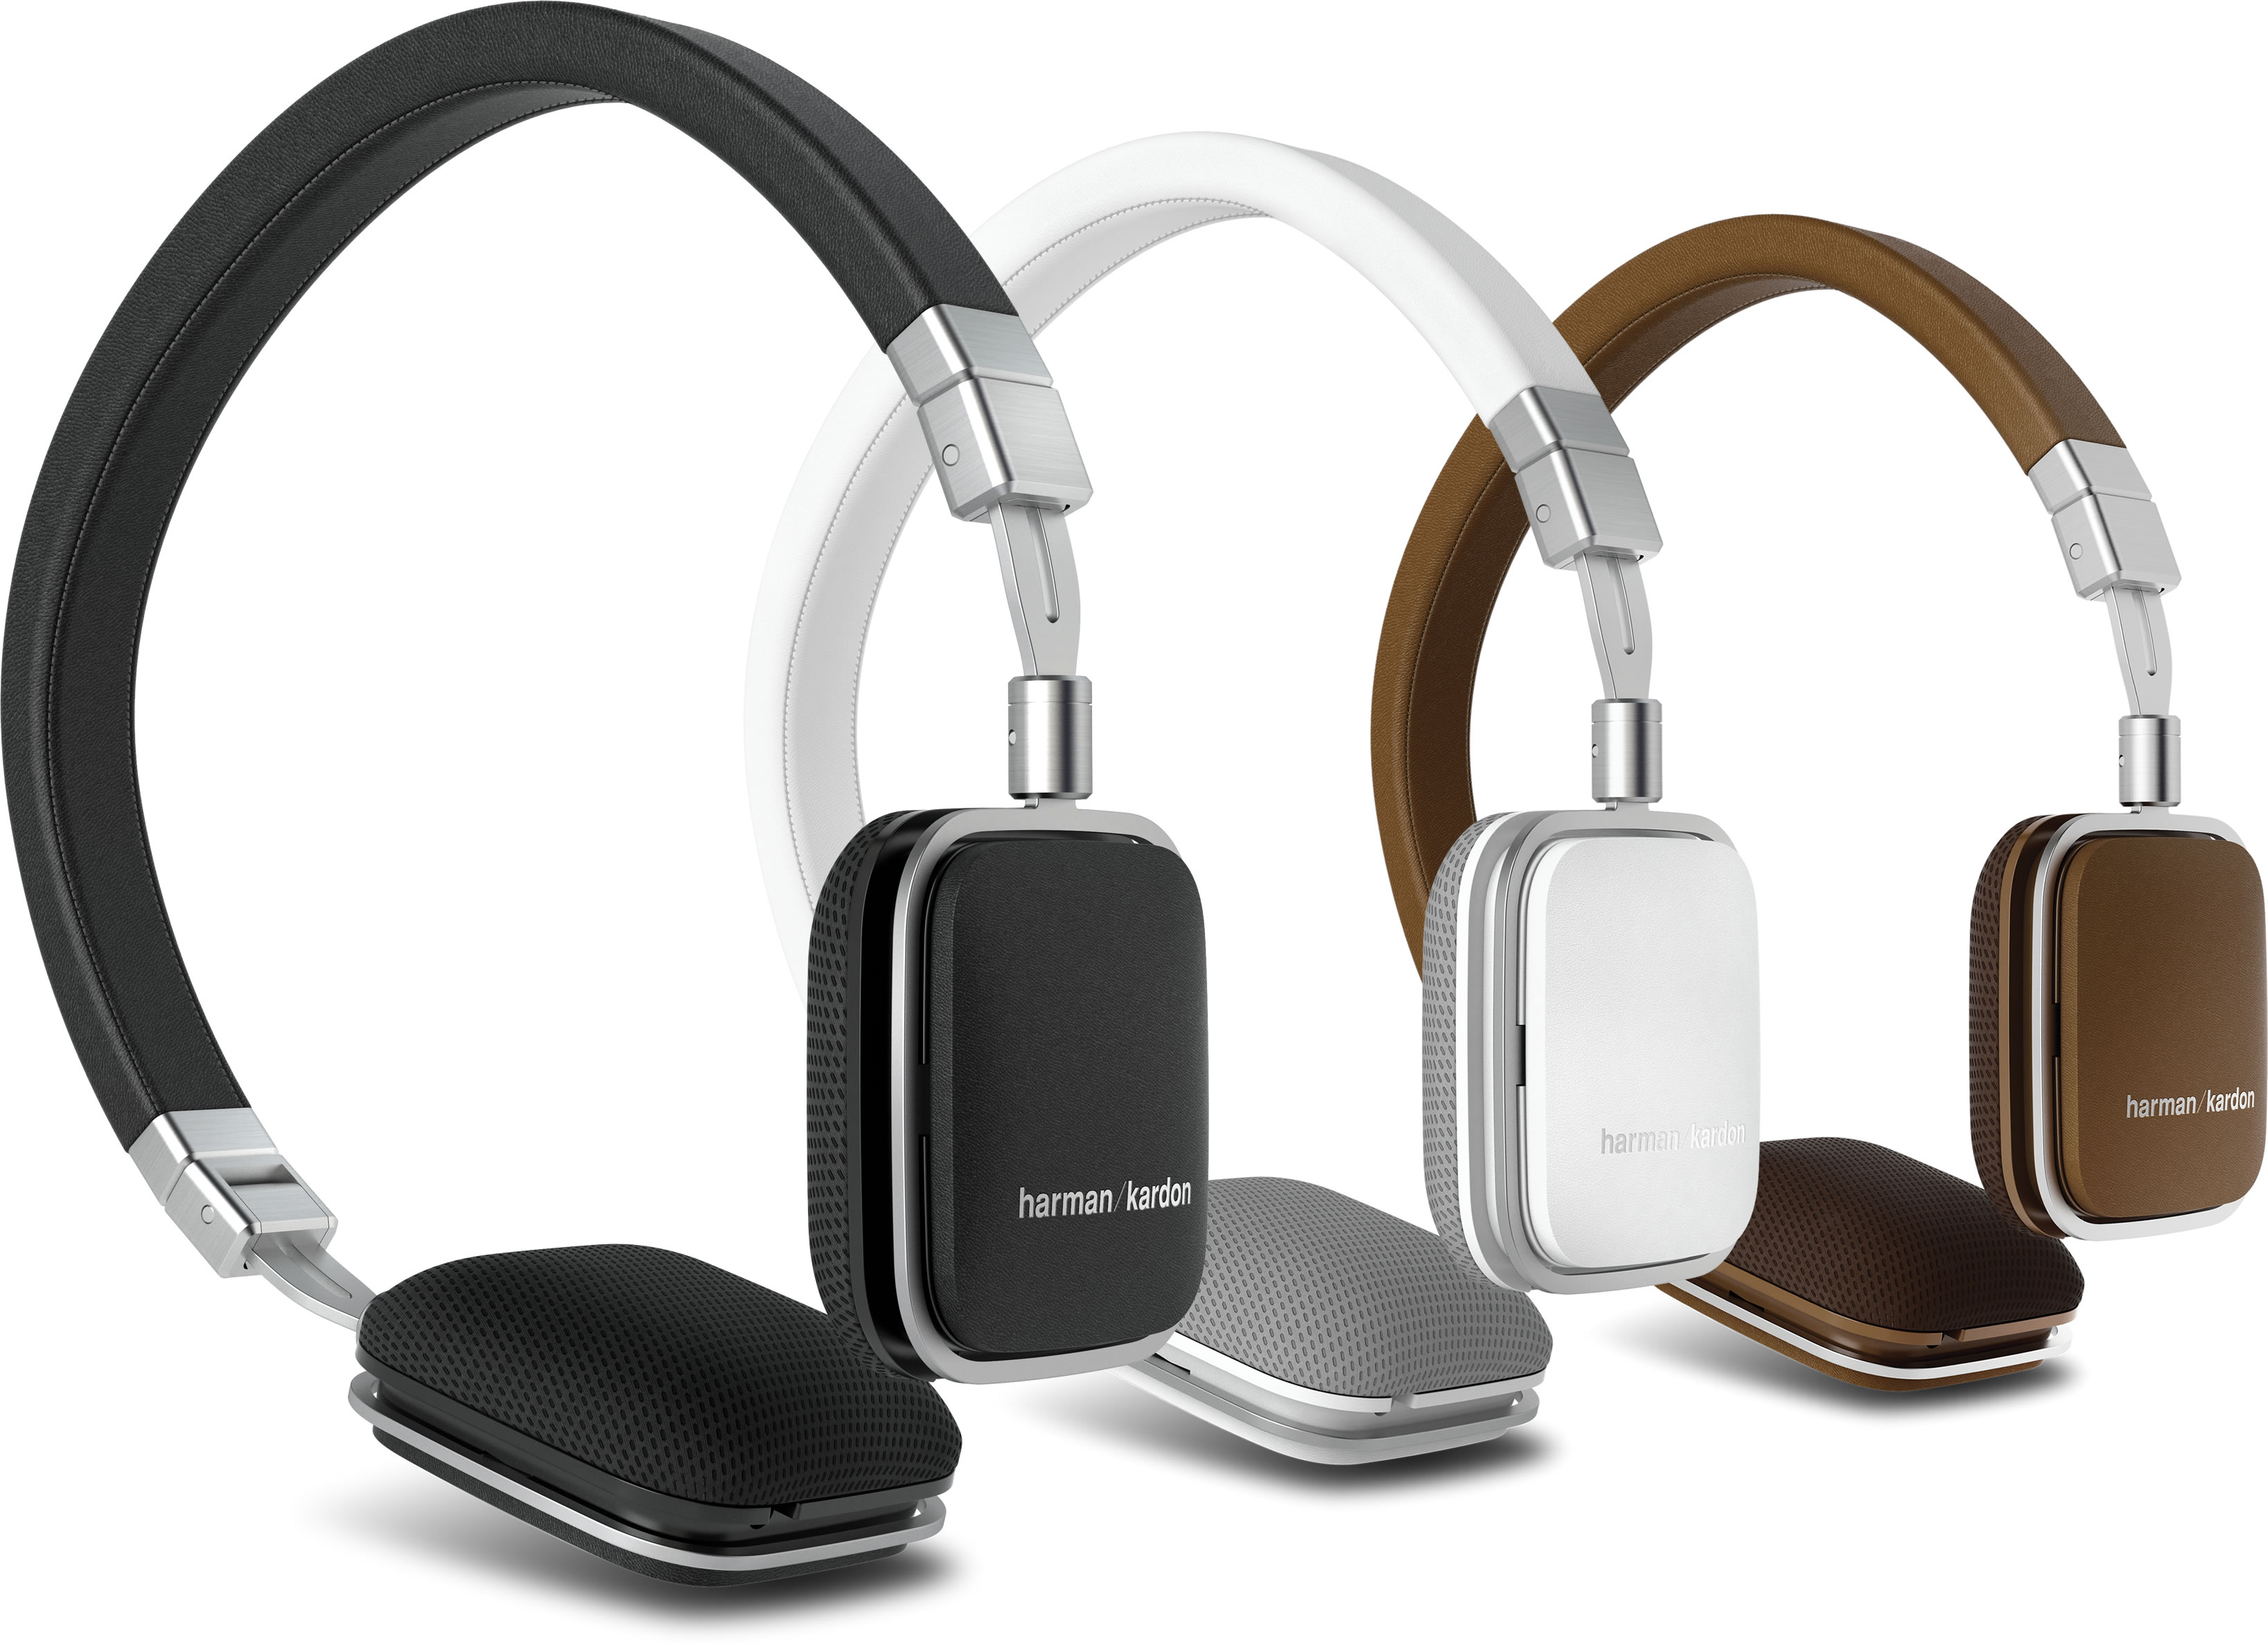 New Harman Kardon SOHO Headphones Look Small but Promise Big Sound